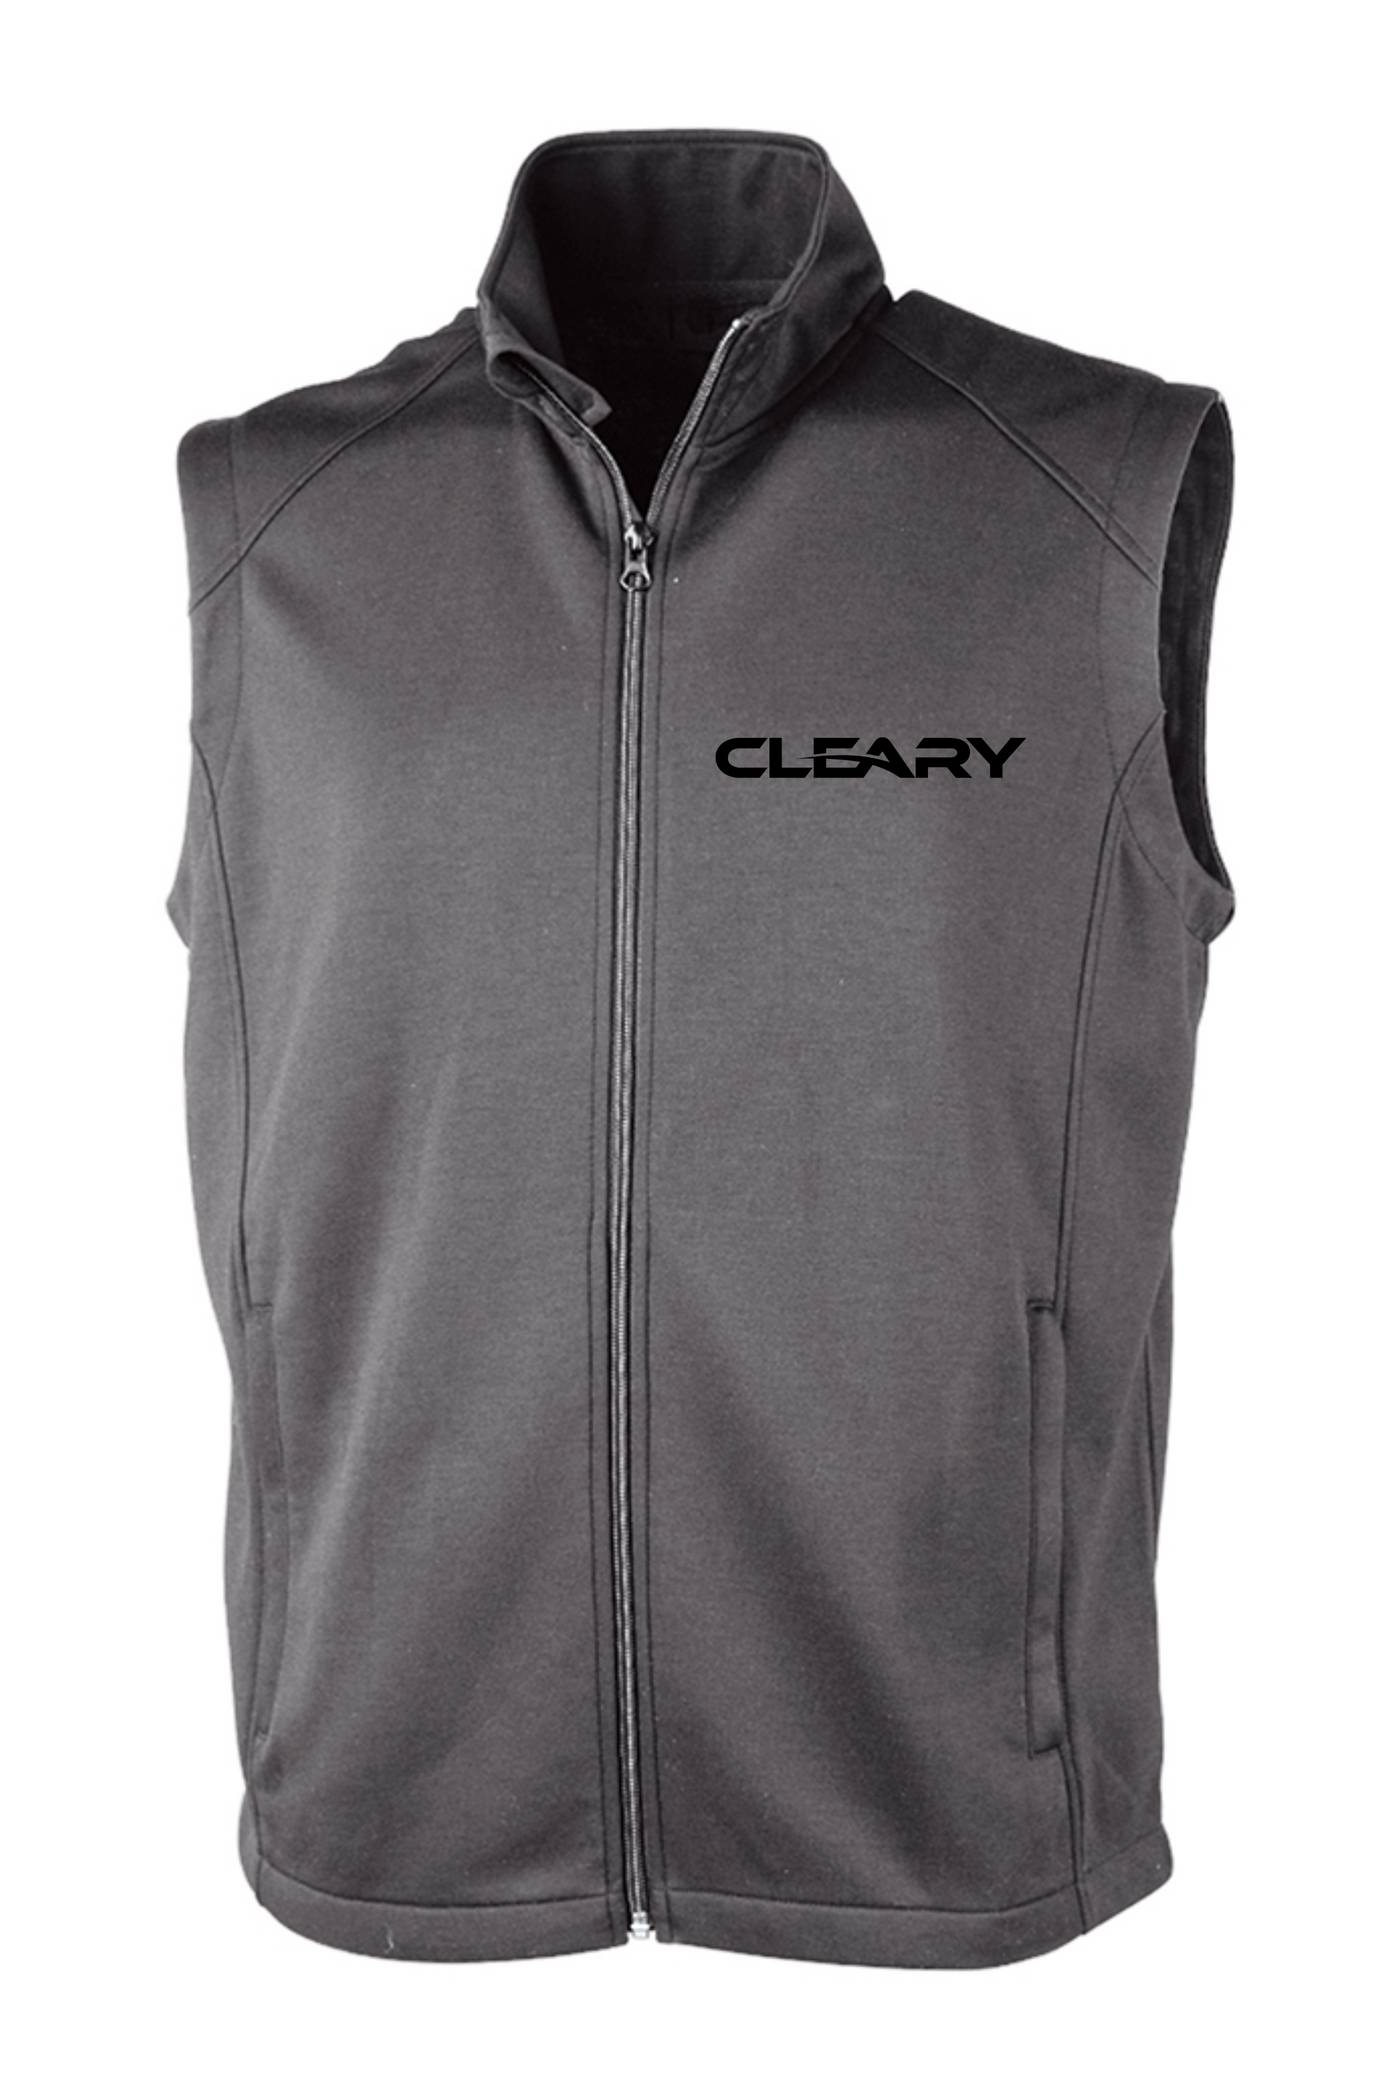 Cleary's Men's Seaport Full Zip Performance Vest Grey